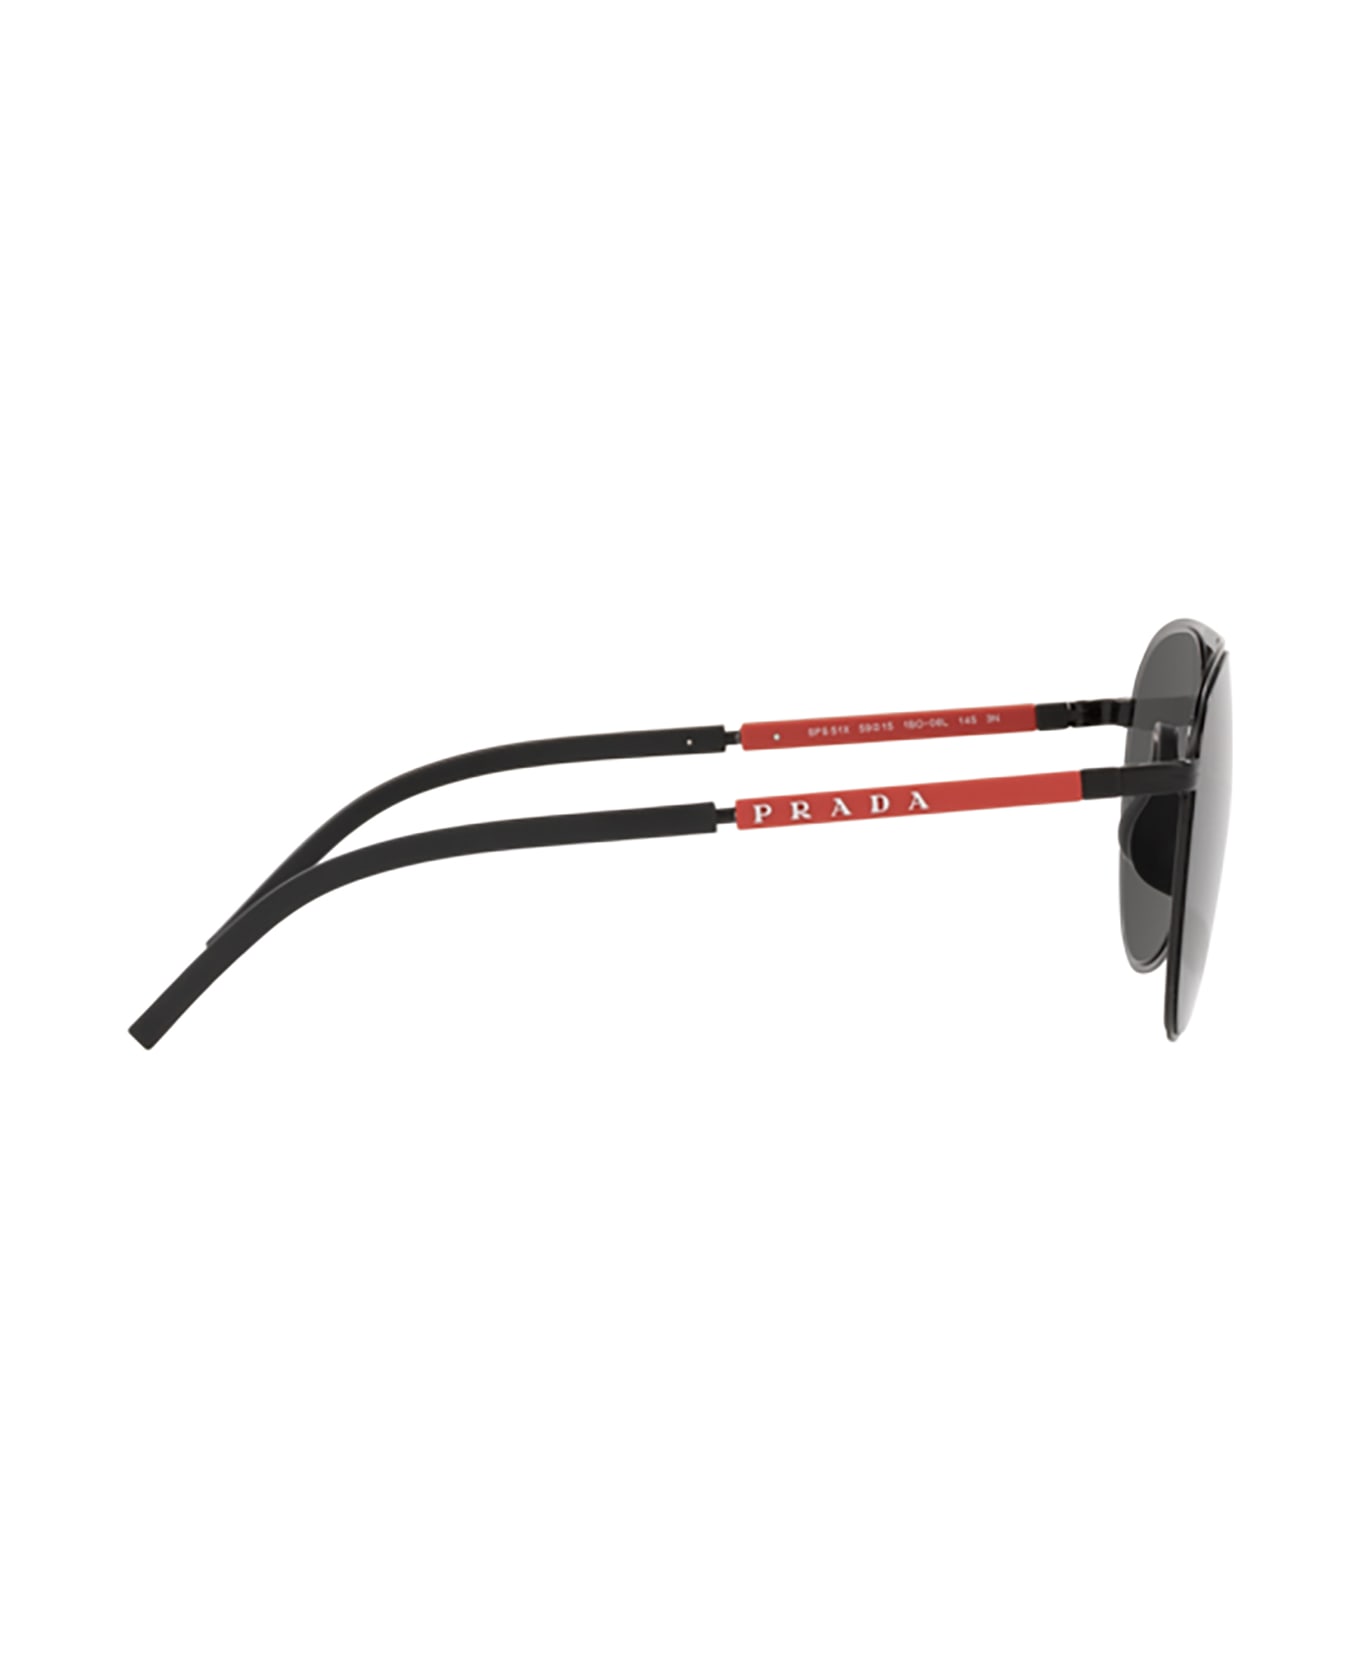 Prada Linea Rossa Ps 51xs Matte Black Sunglasses - Matte Black